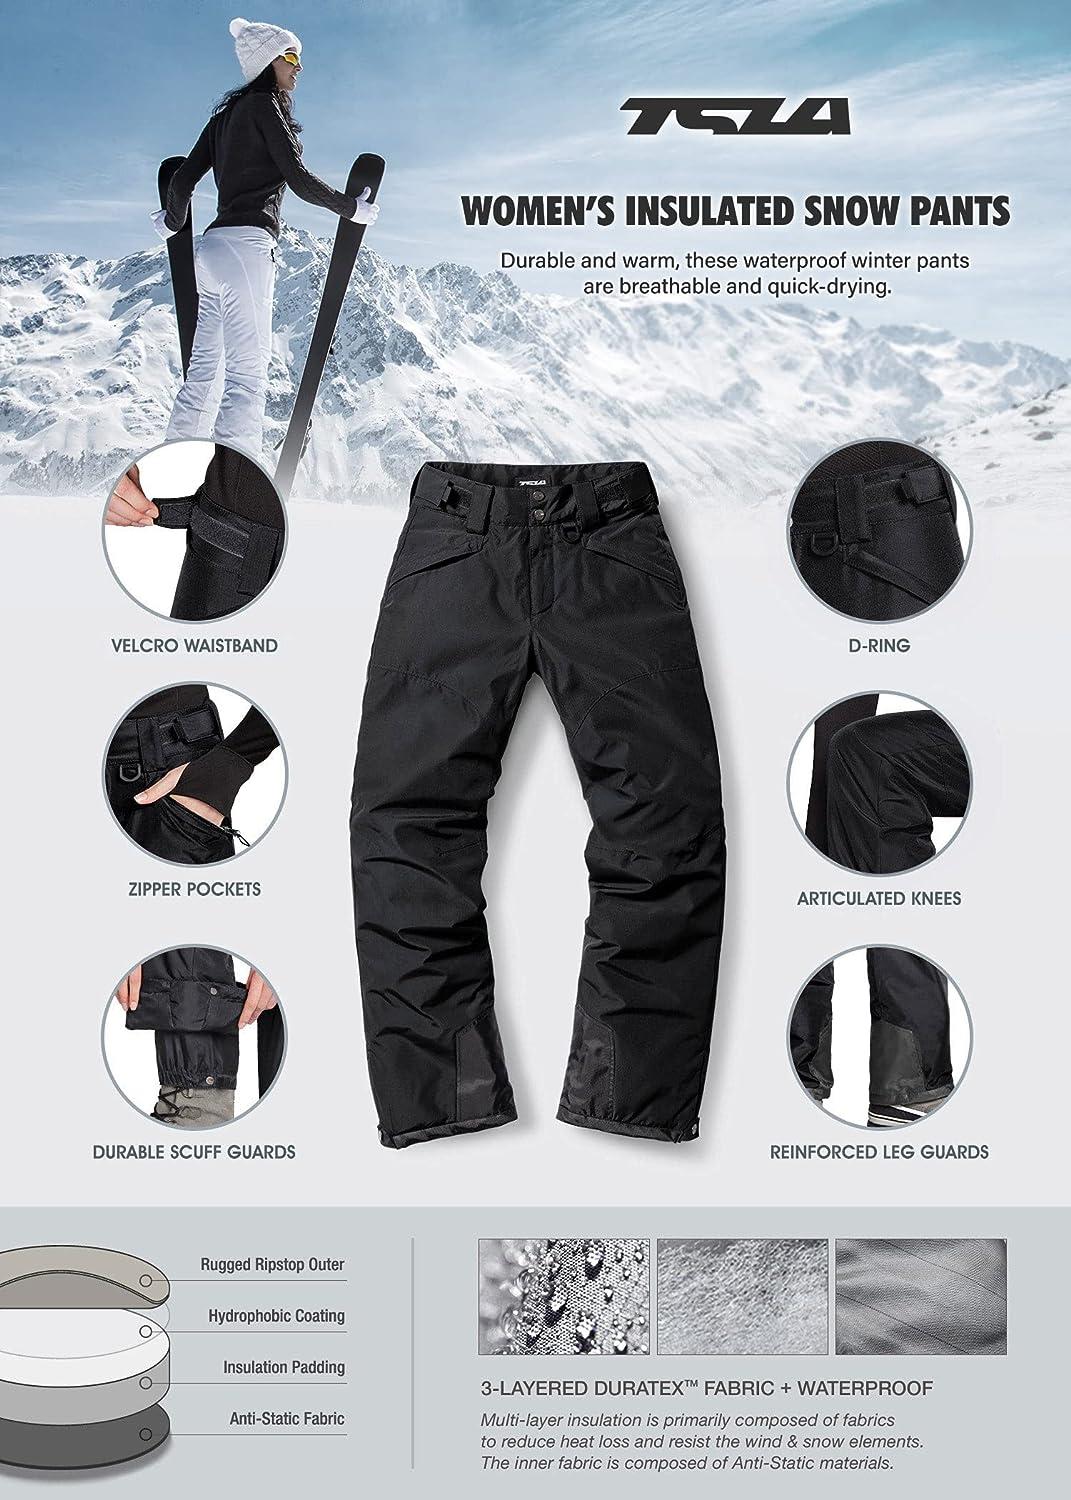 Buy Pure Lapland Softshell Stretch Ski Pant Black Extra Short, Short,  Regular & Long 18-30 Online